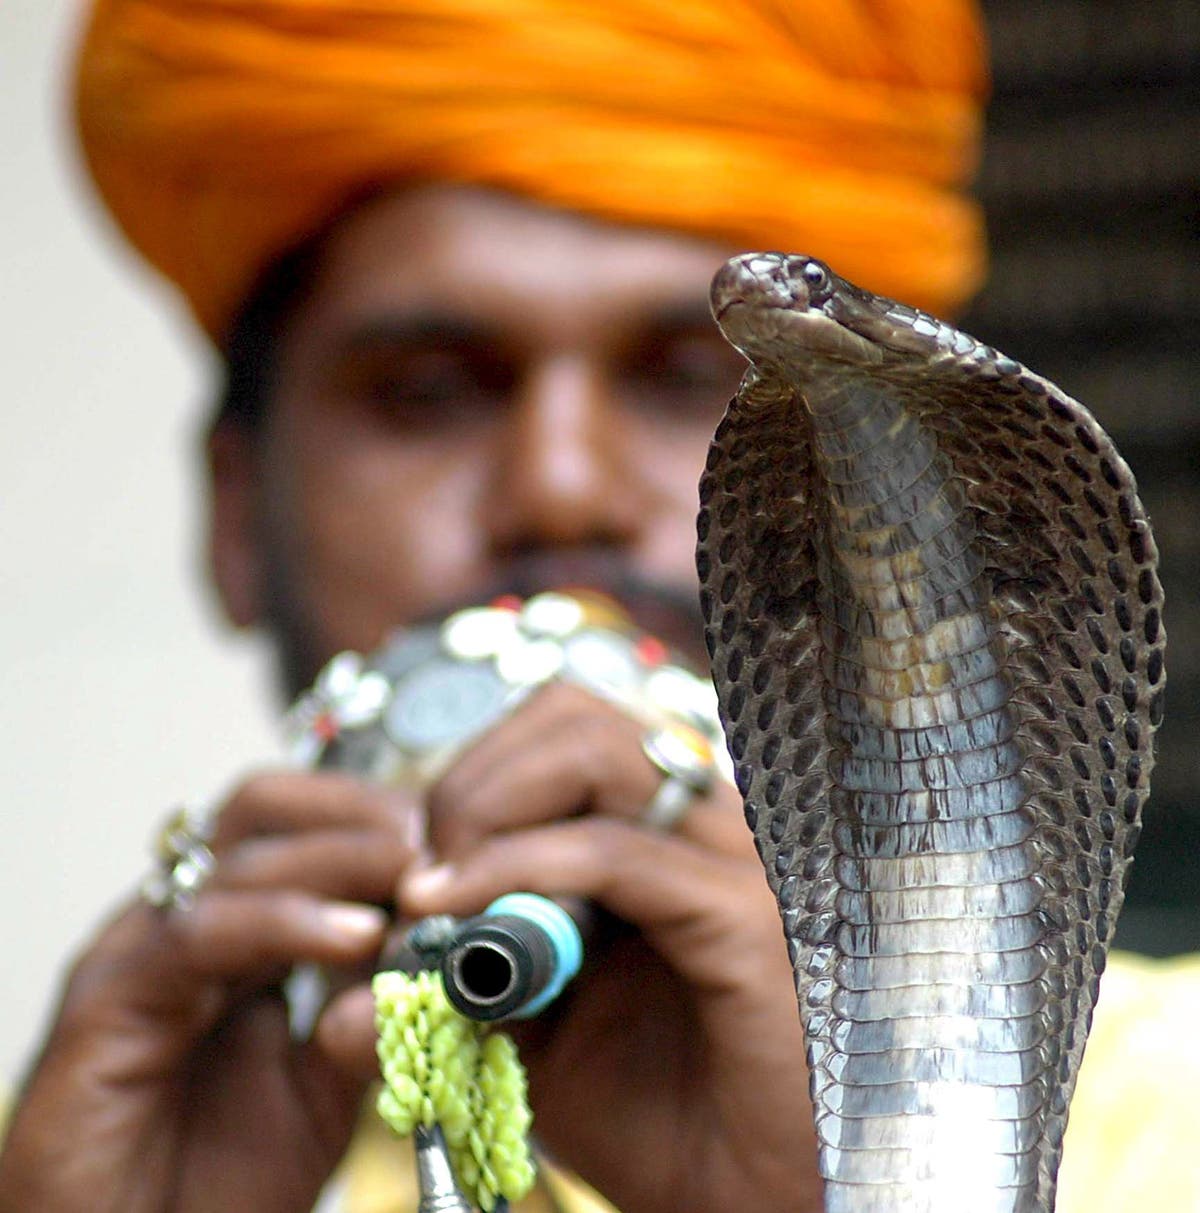 Indian restaurant shut down after customer finds snake skin in food